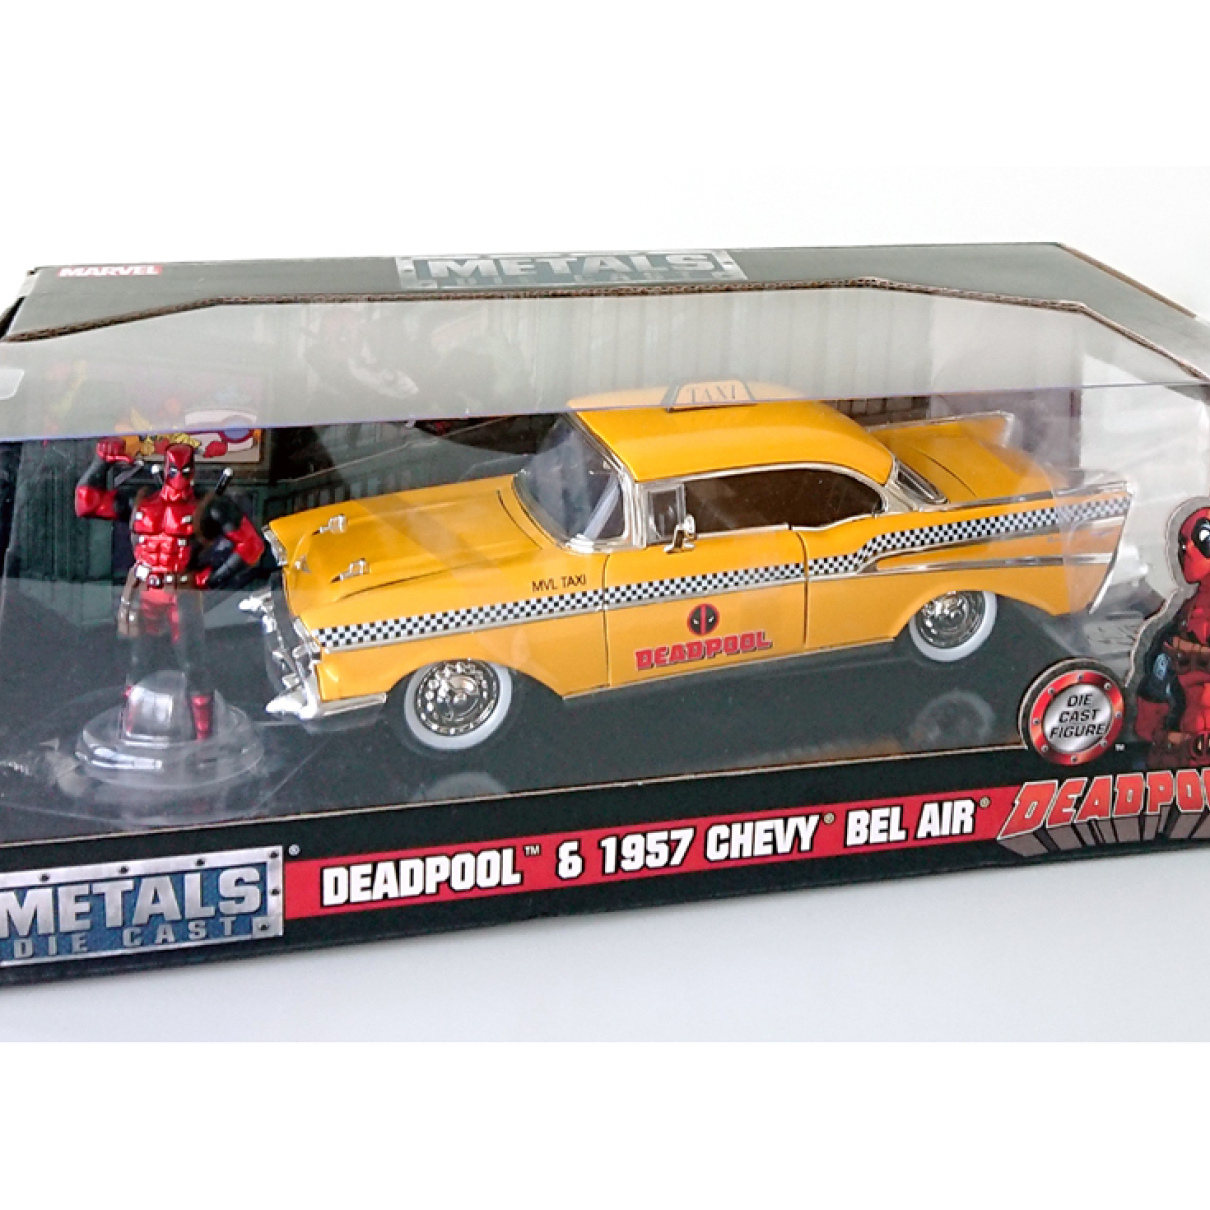 Deadpool Figur und Chevrolet Bel Air 1957 Auto, € 45,- (4623